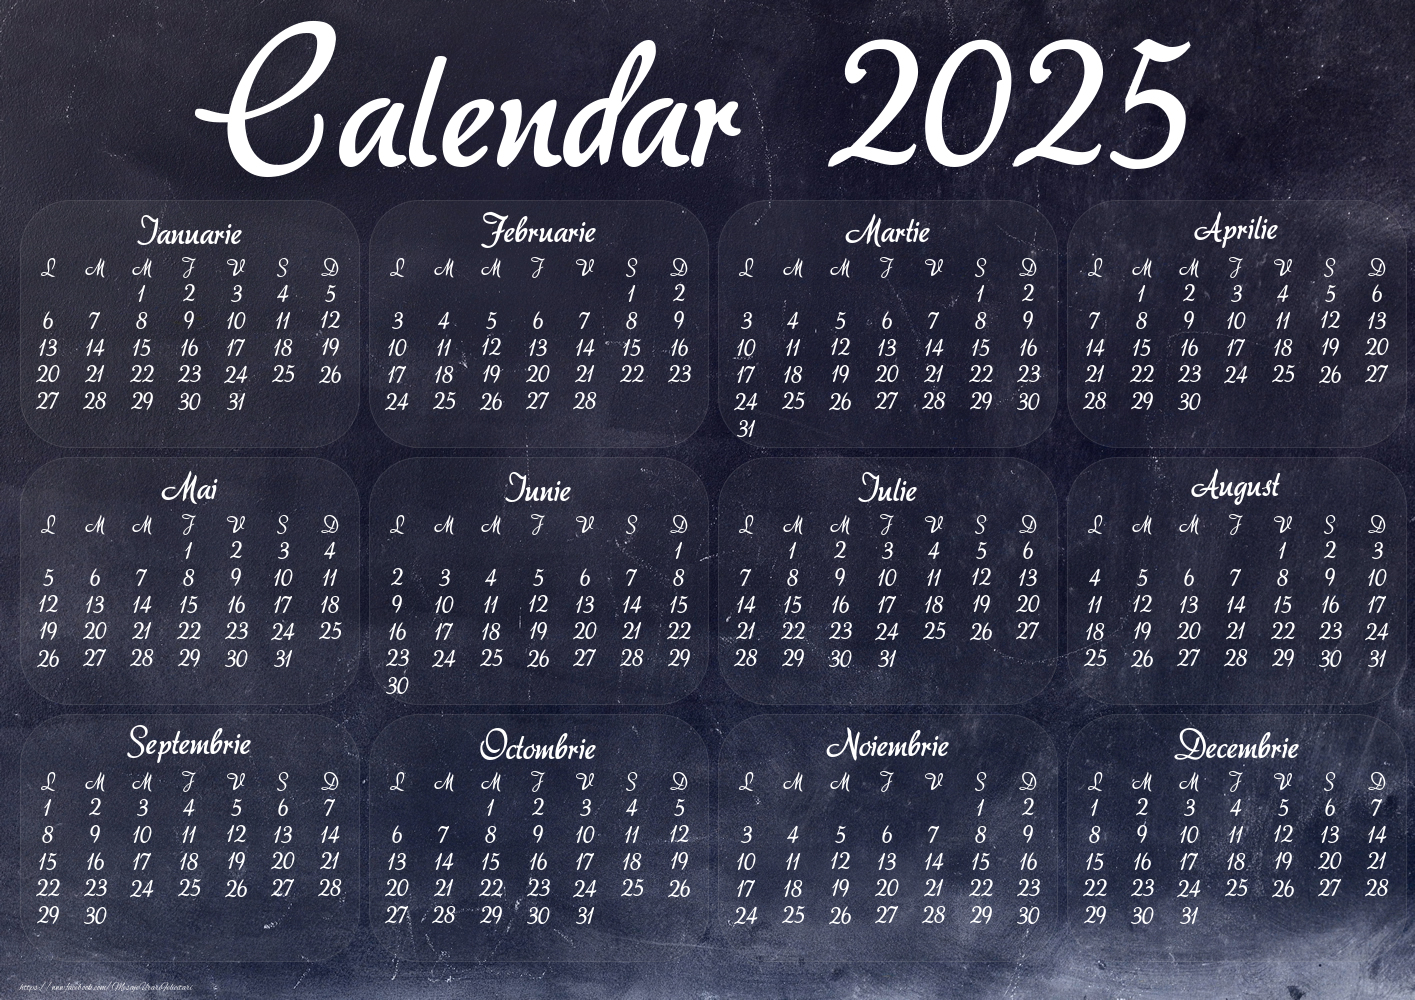 Imagini cu calendare - Calendar 2025 - Black - Model 0034 - mesajeurarifelicitari.com